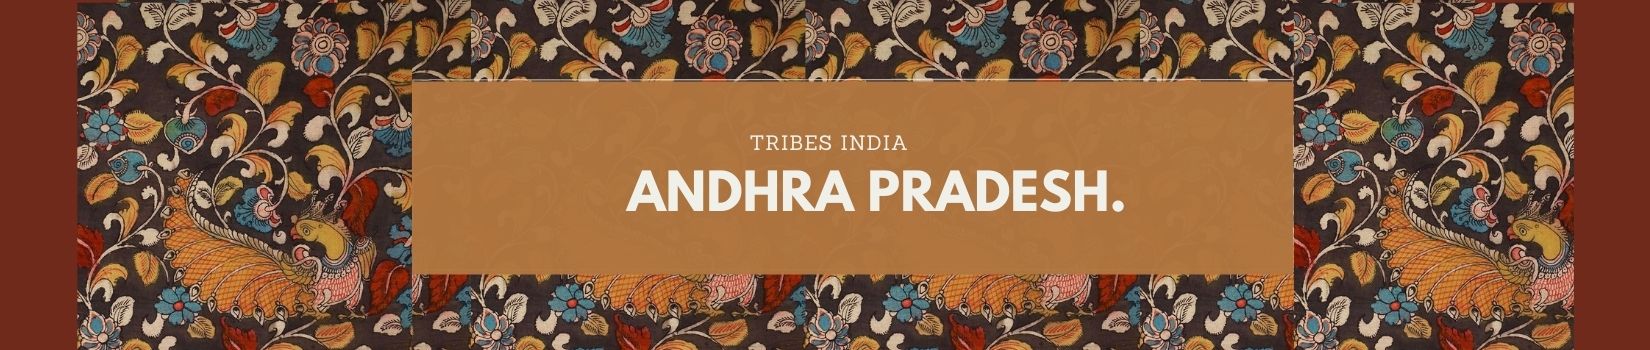 Tribes India Andhra Pradesh